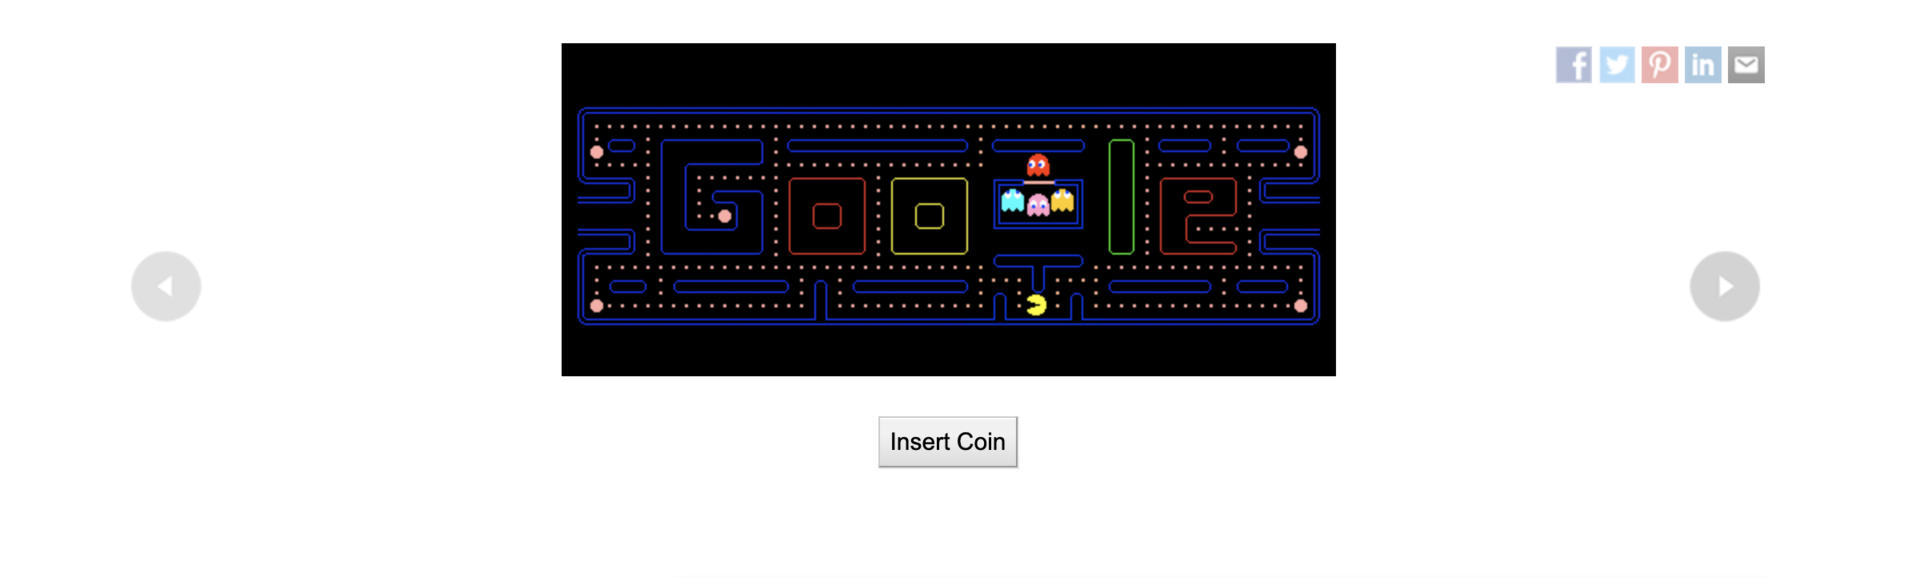 Every Olympic Google Doodle  Google doodles, Best google doodles